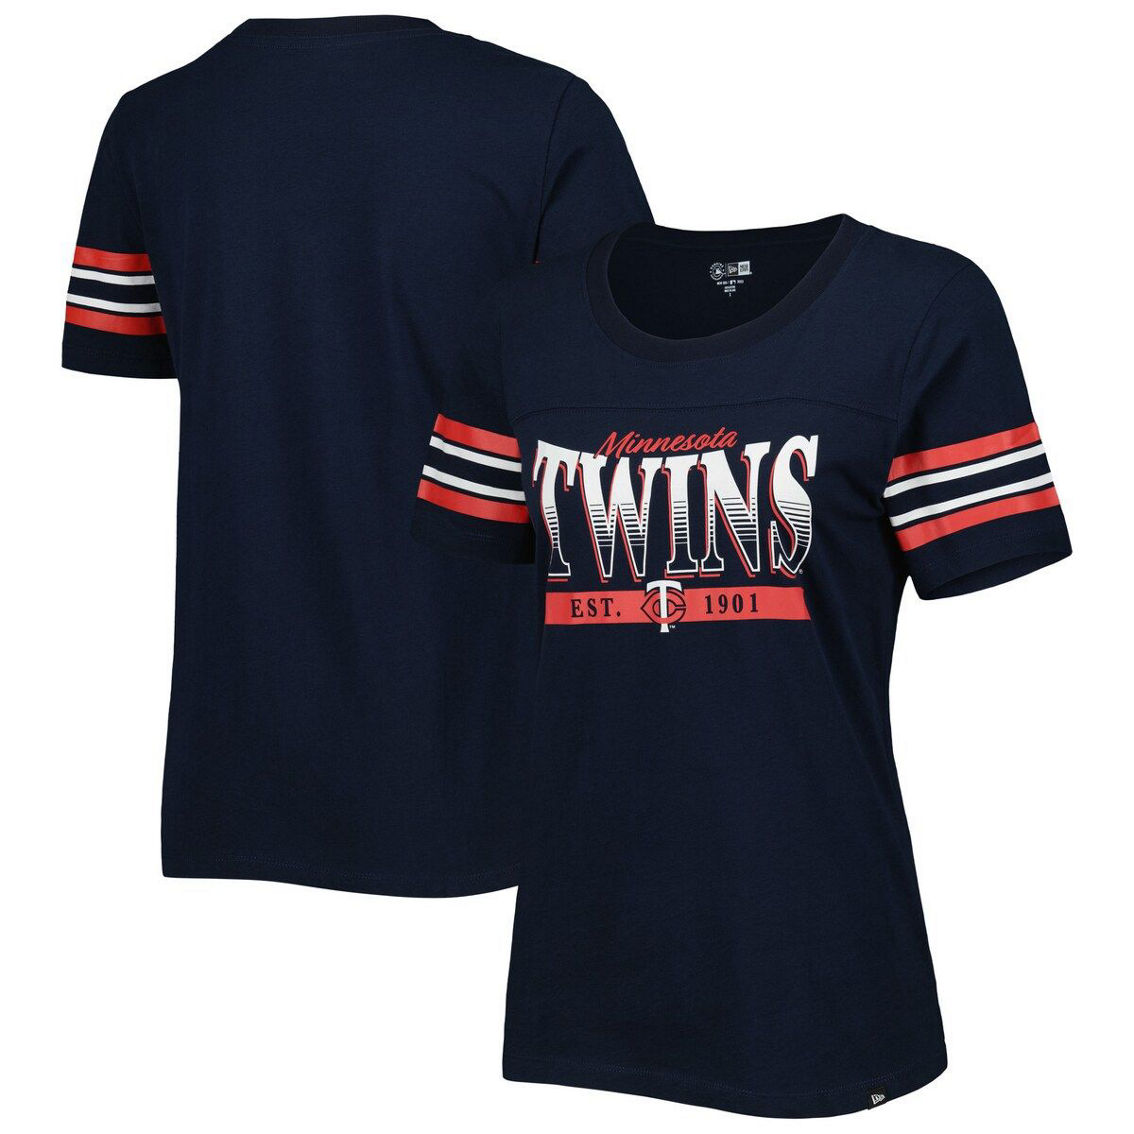 New Era Women's Navy Minnesota Twins Team Stripe T-Shirt - Image 2 of 4